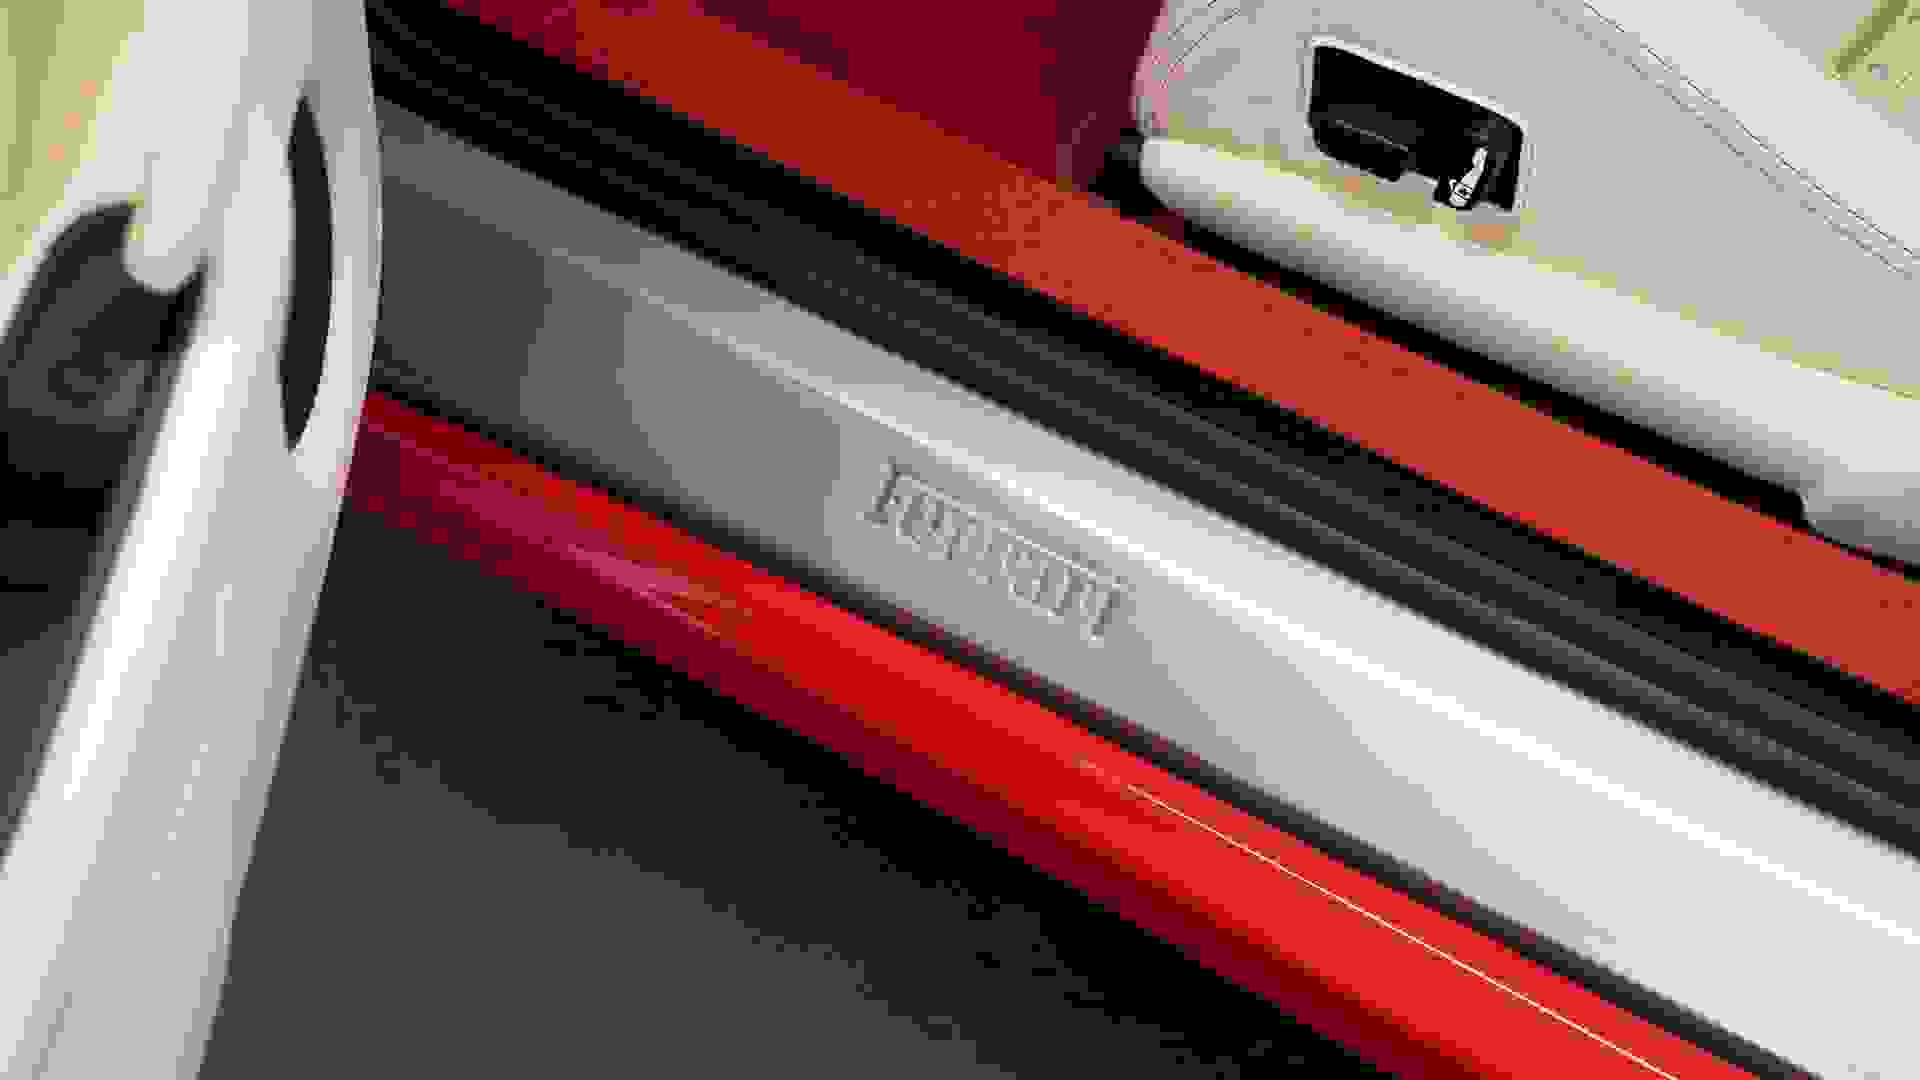 Ferrari F430 Photo 0c2b6a82-e857-4aeb-8ea8-0ca1b878b182.jpg